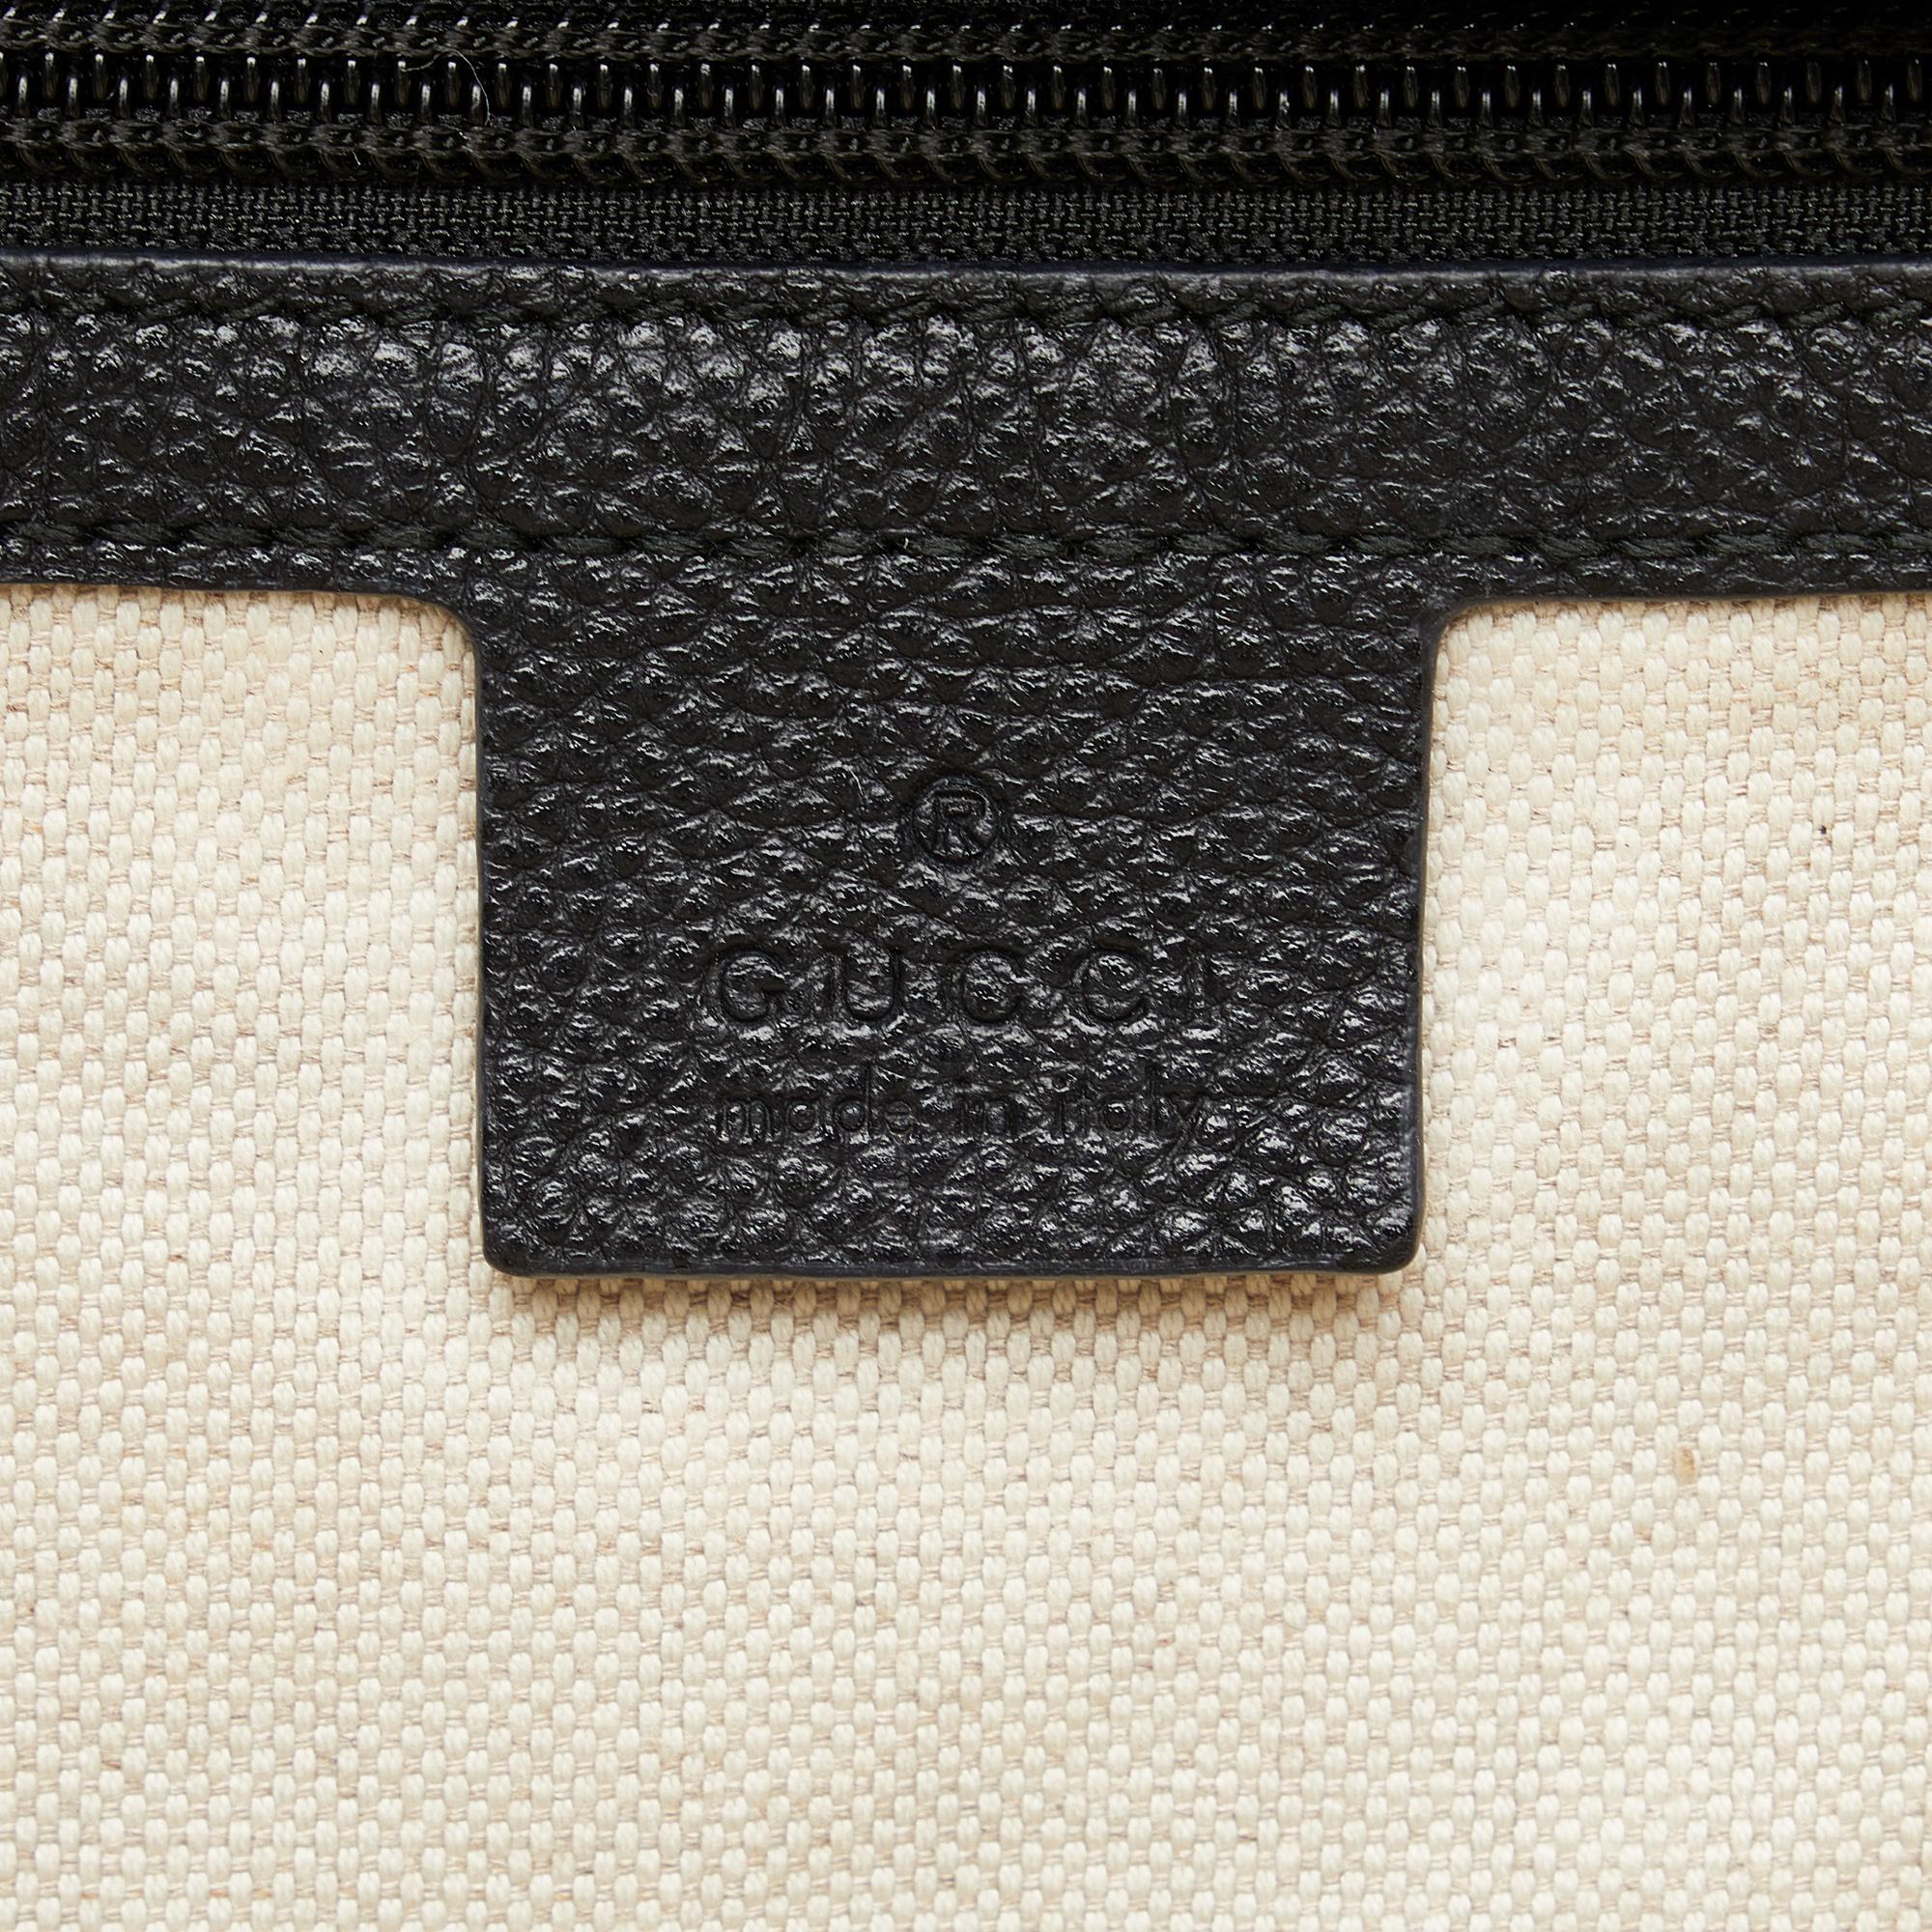 Gucci Black Logo Backpack